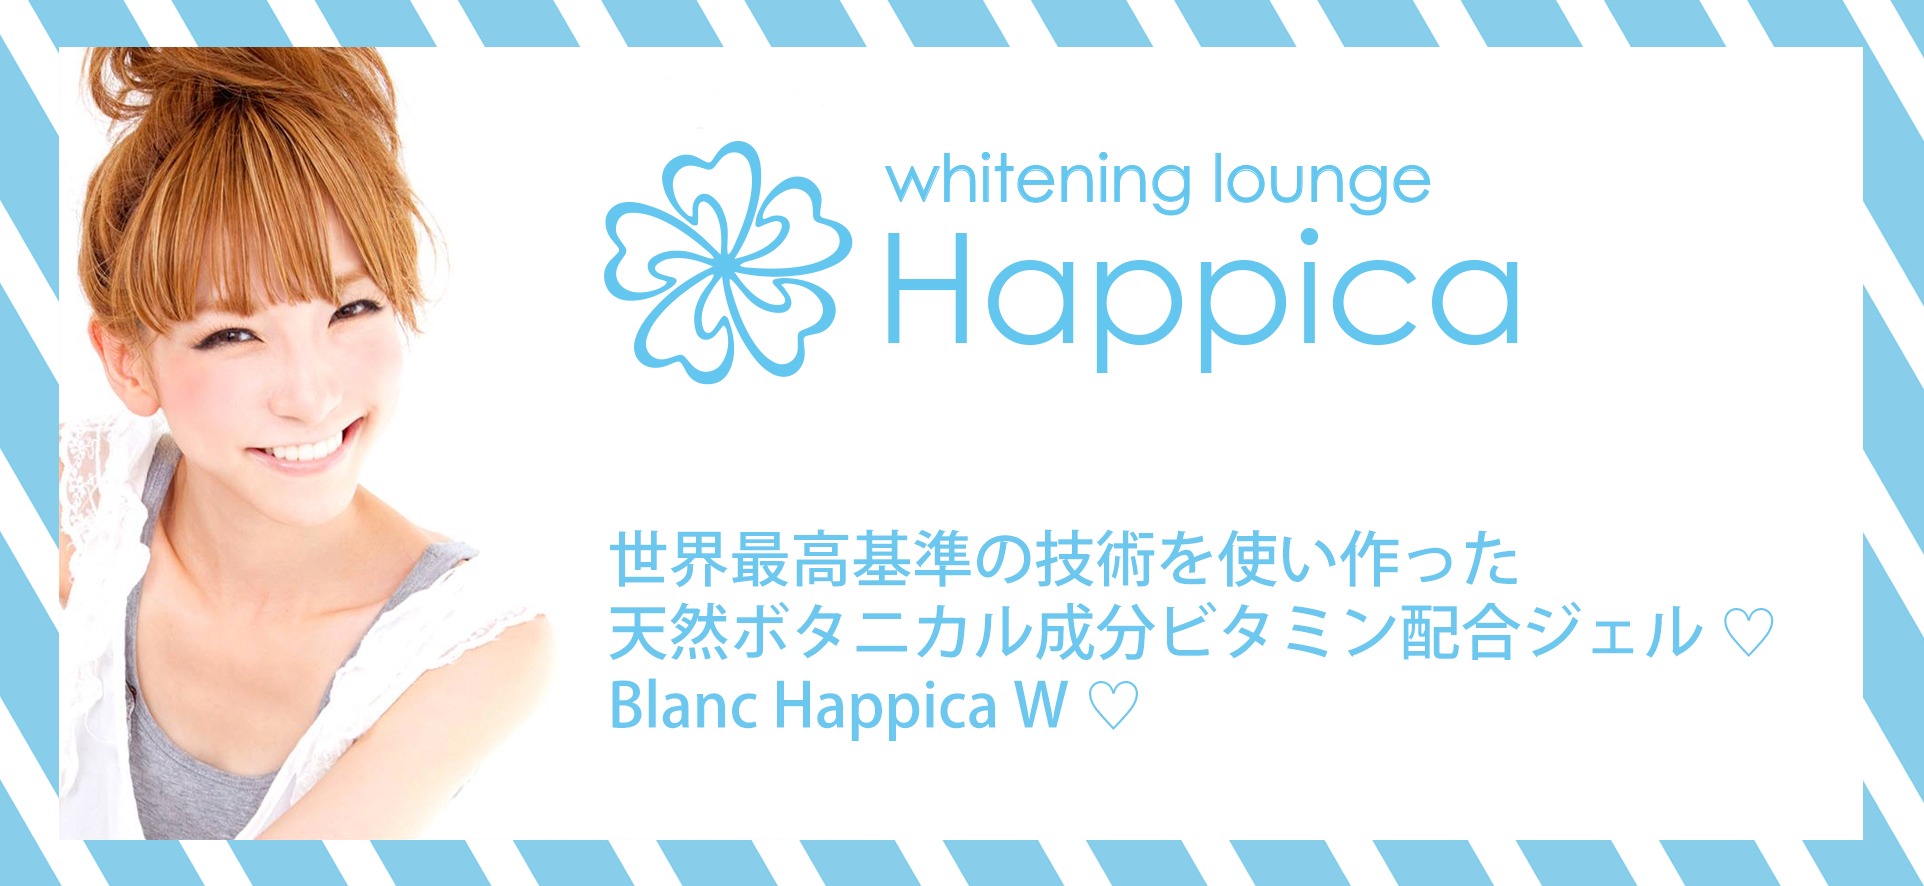 whitening lounge happica